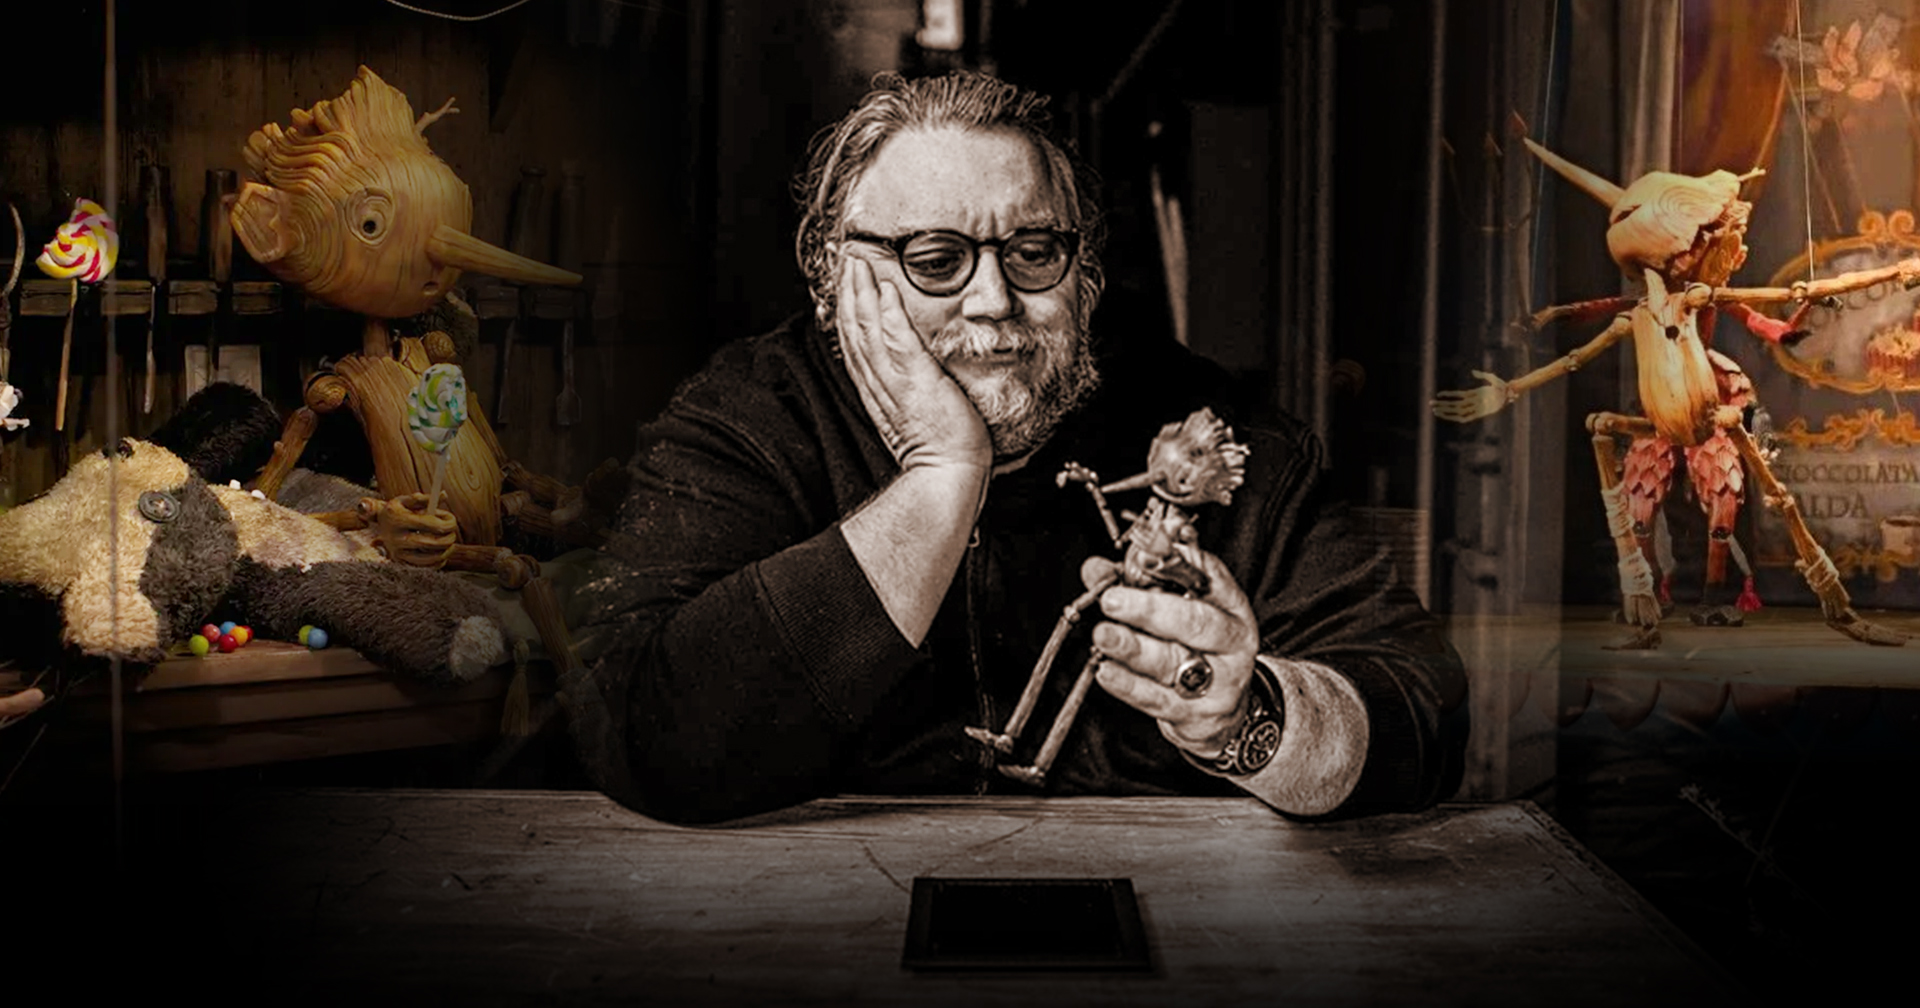 Guillermo del Toro เปิดเผยภาพโมเดลต้นแบบดีไซน์สุดหลอน ที่ใช้ในภาพยนตร์สต๊อปโมชัน ‘Pinocchio’